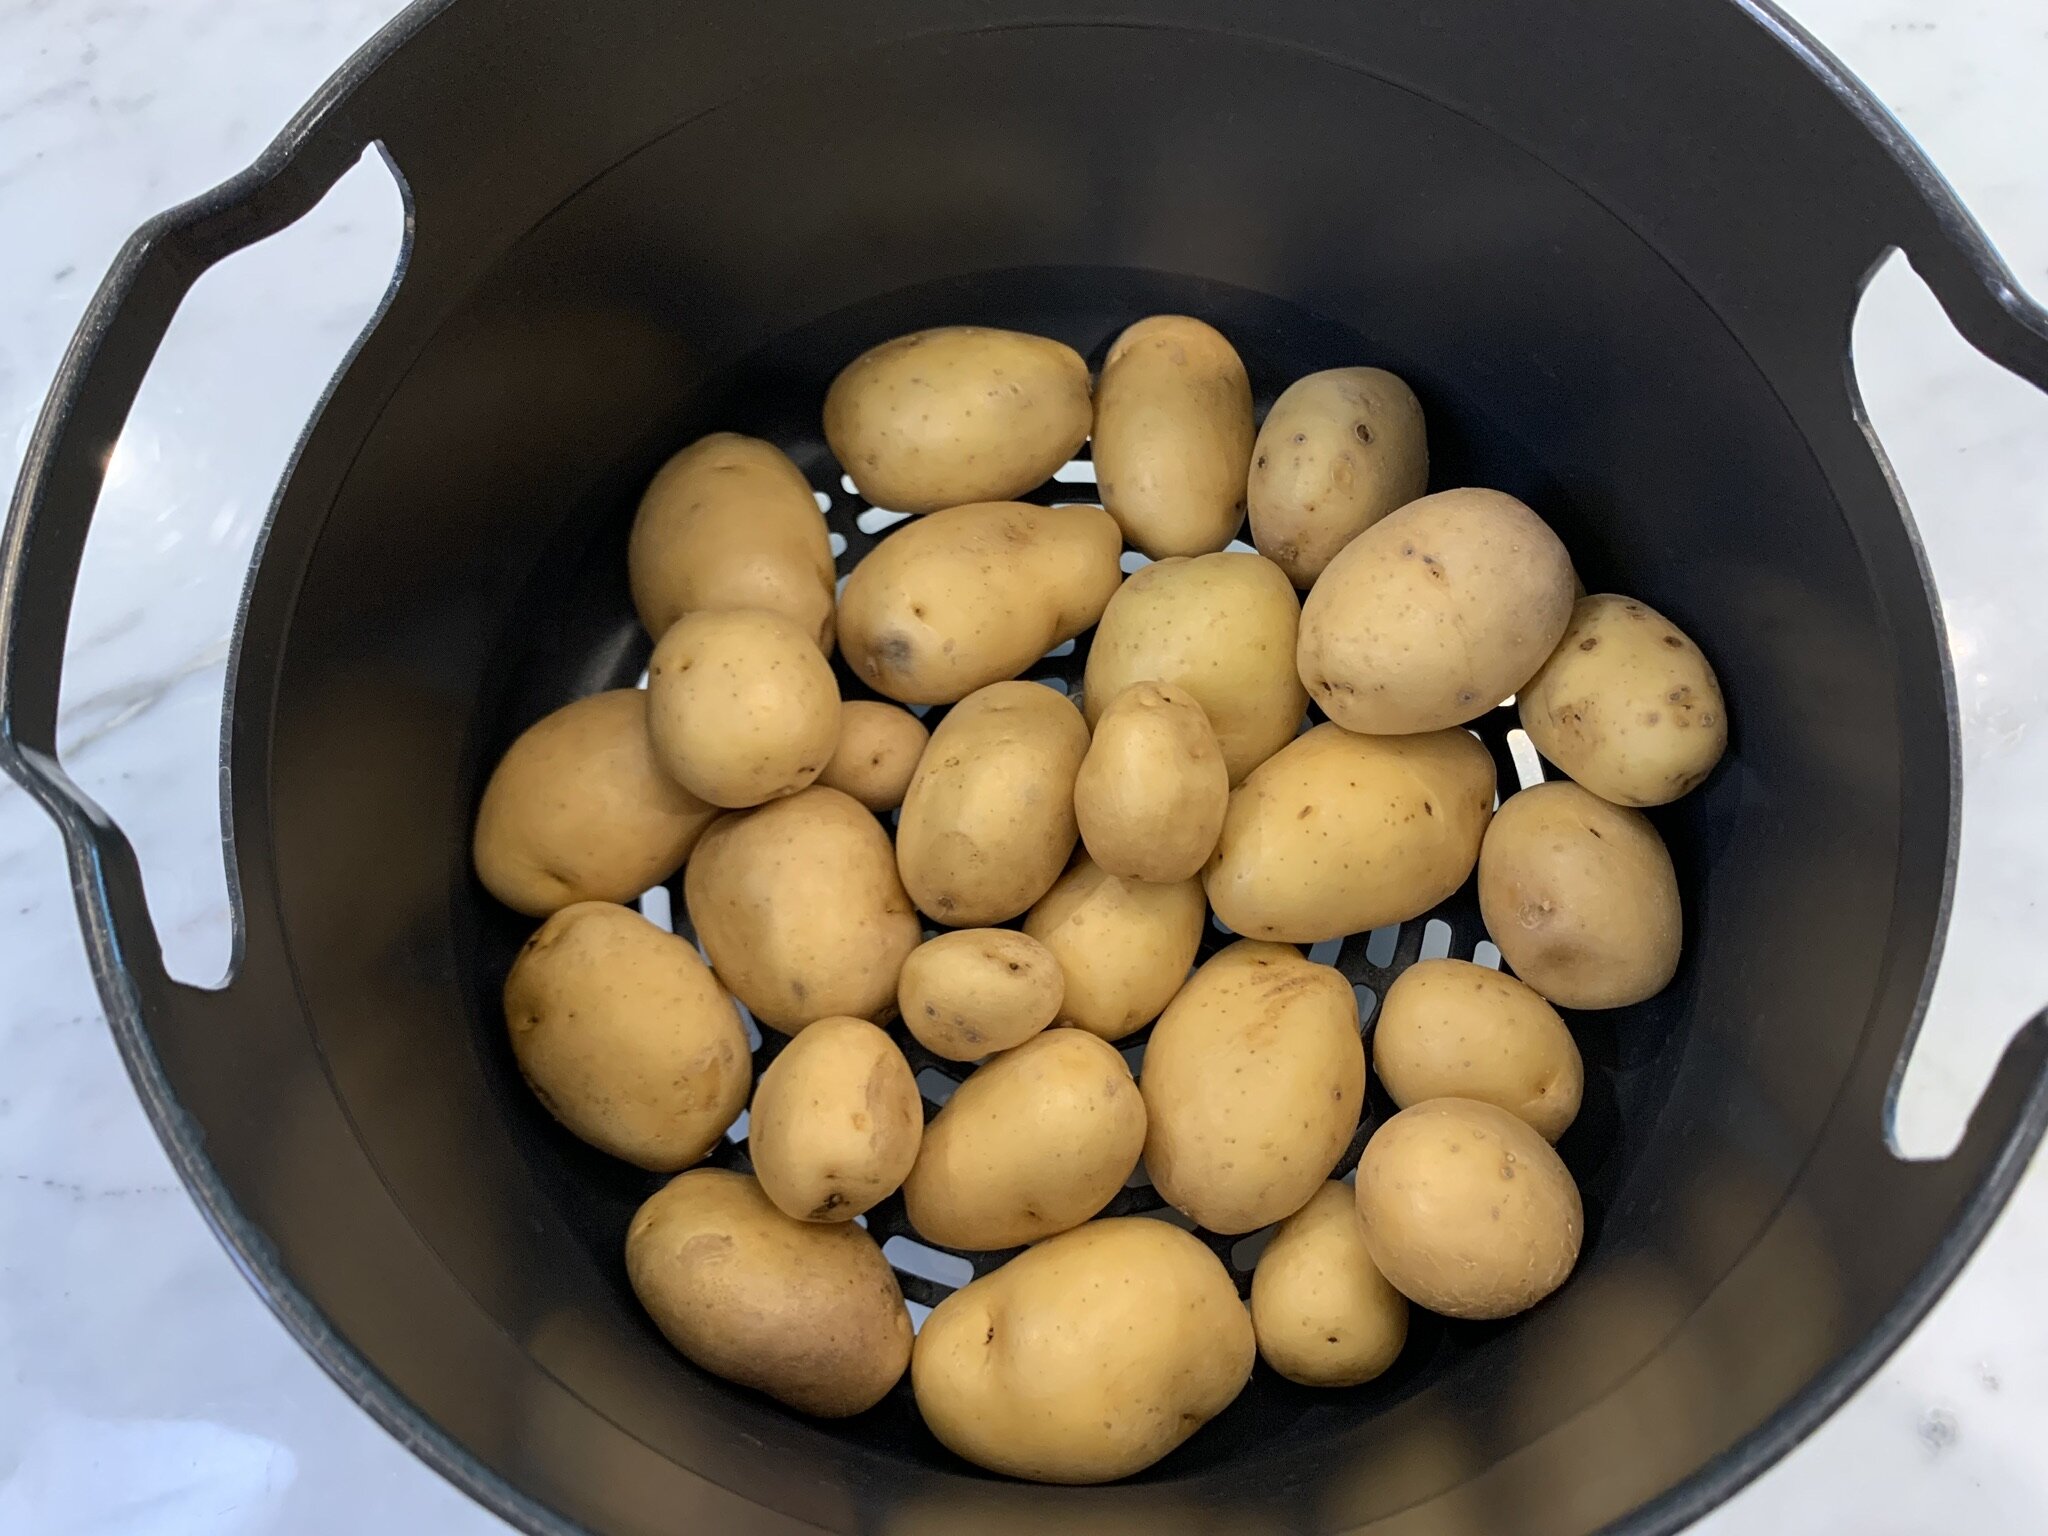 b) Potatoes in basket.